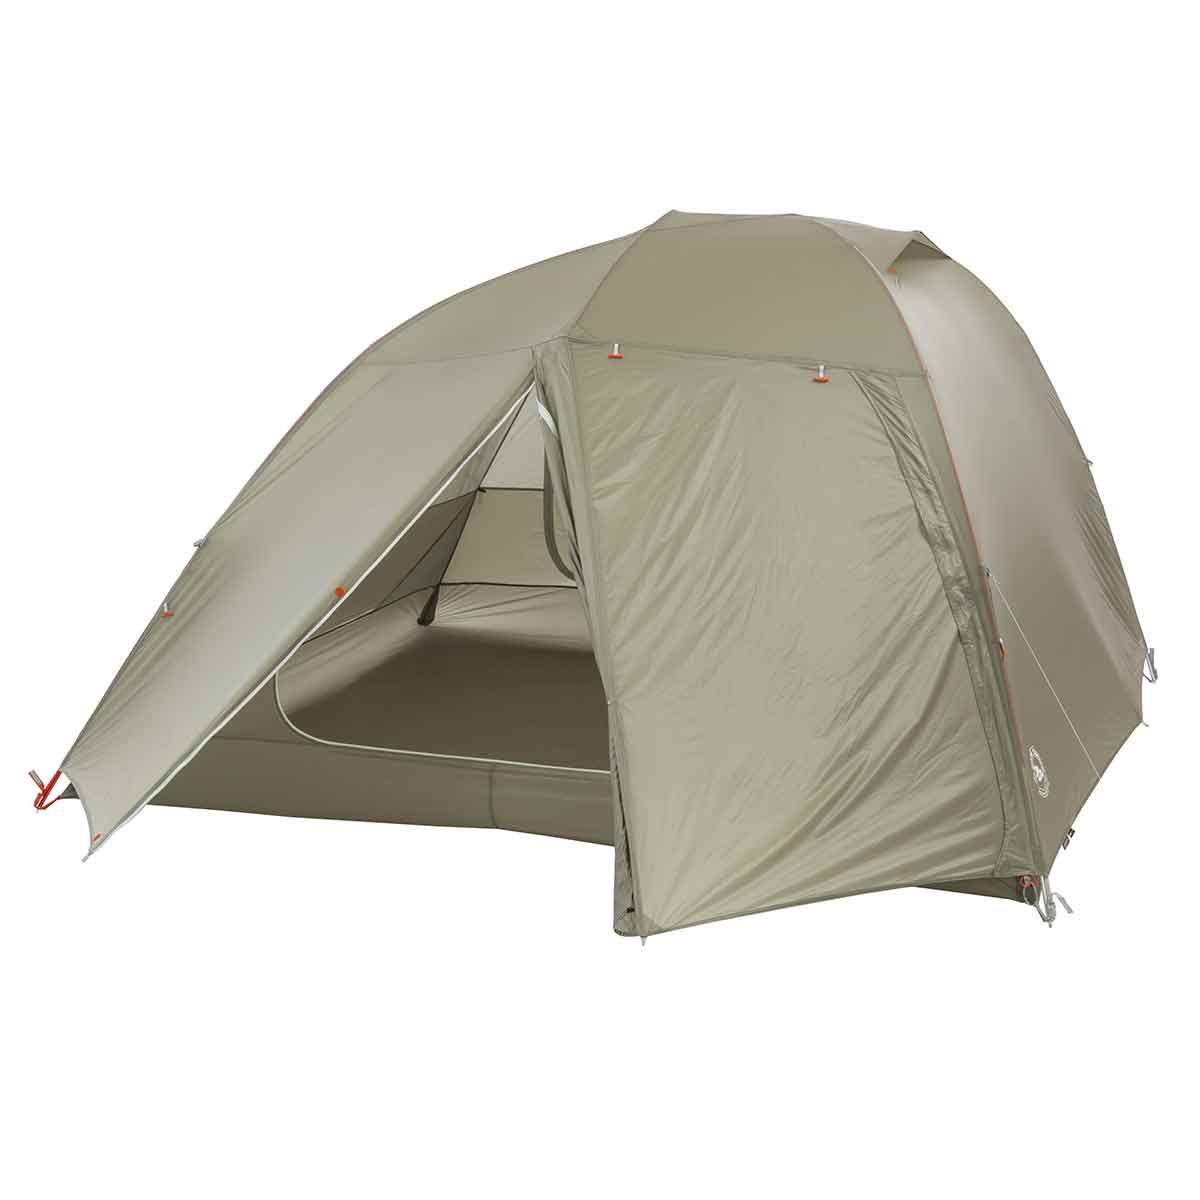 Big Agnes Copper Spur HV UL4 backpacking tent - 4 people